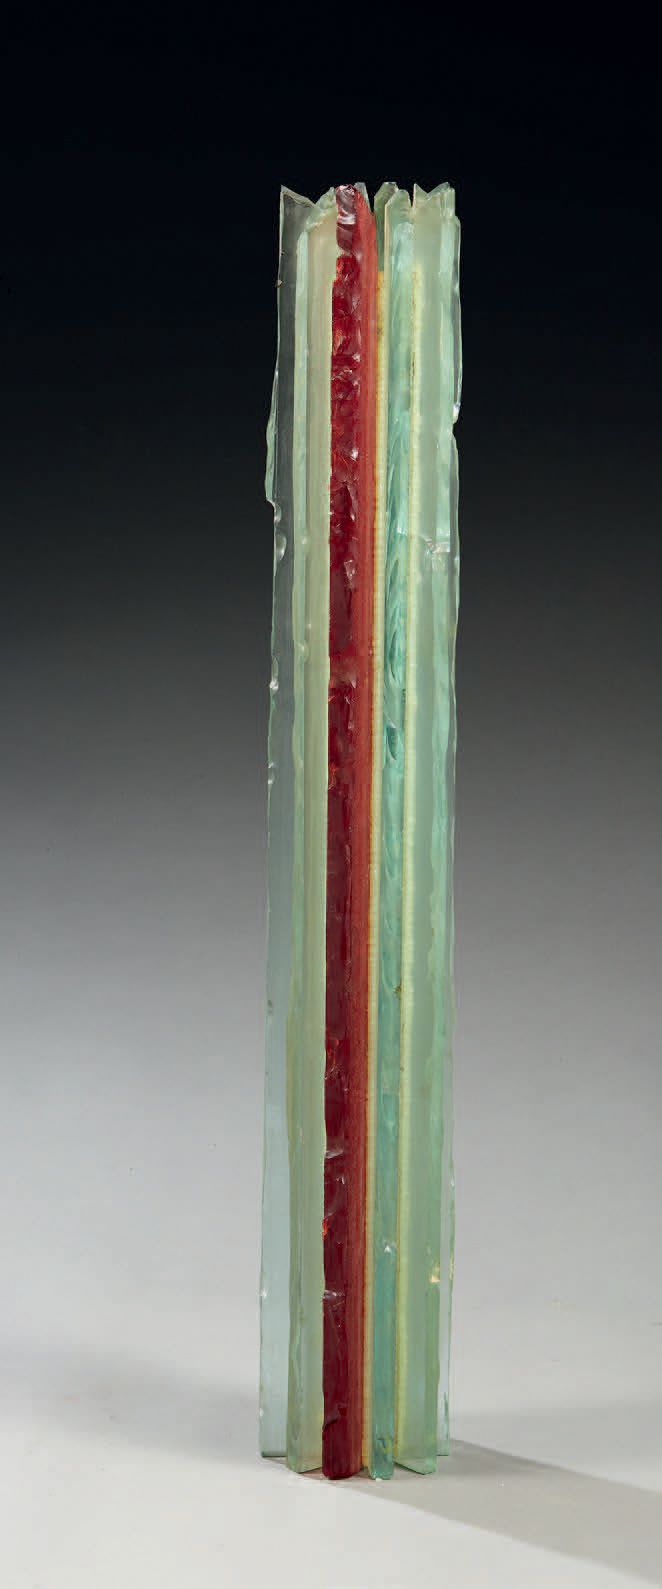 TRAVAIL 1970-1980 
Lámpara de mesa de cristal tallado
H: 40 cm